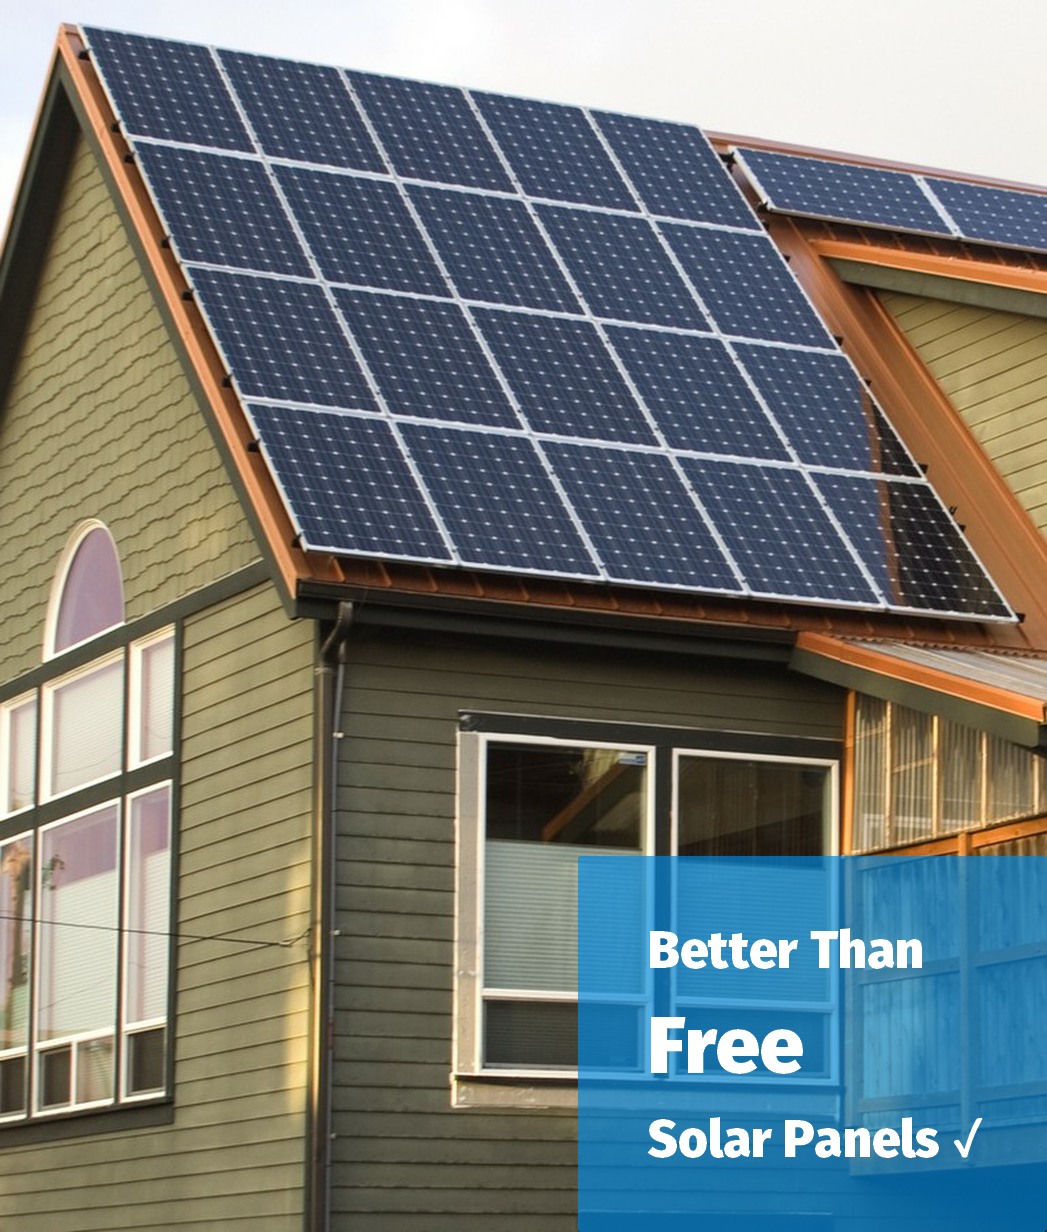 Better than free solar panels